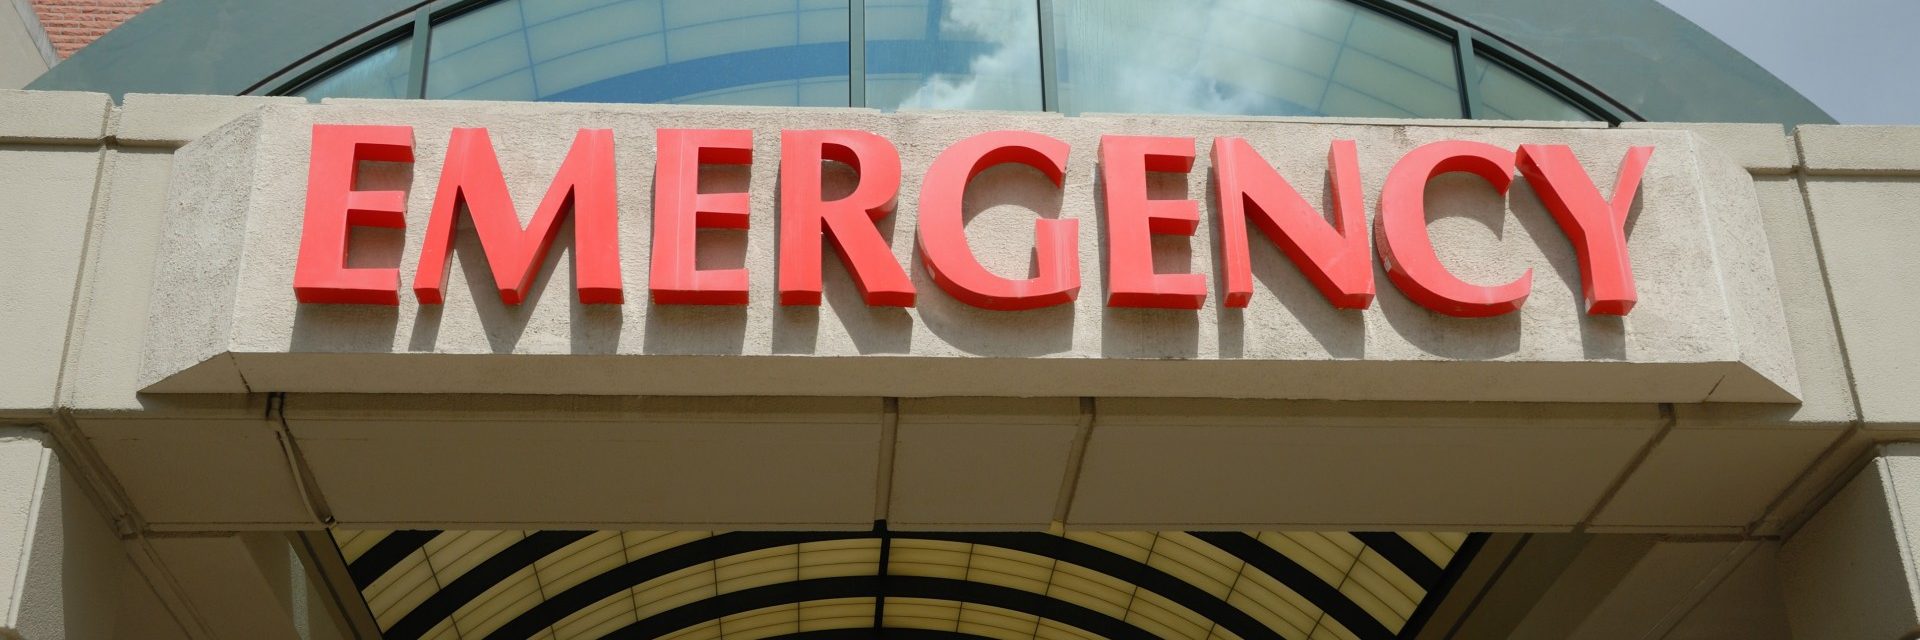 Emergency Sign at hospital